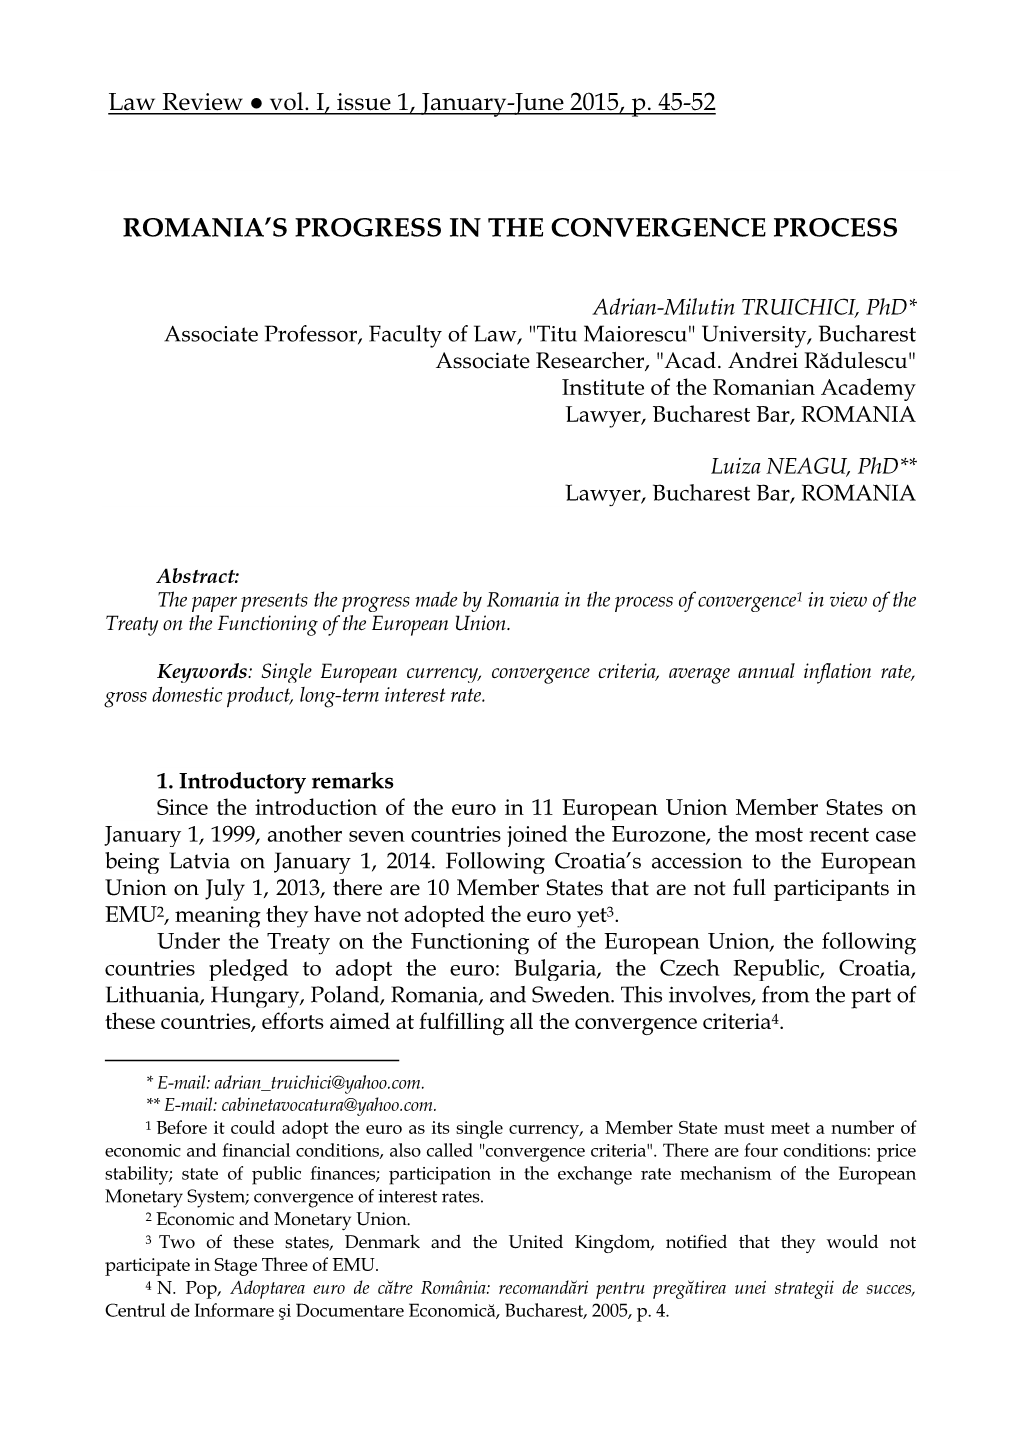 Romania's Progress in the Convergence Process